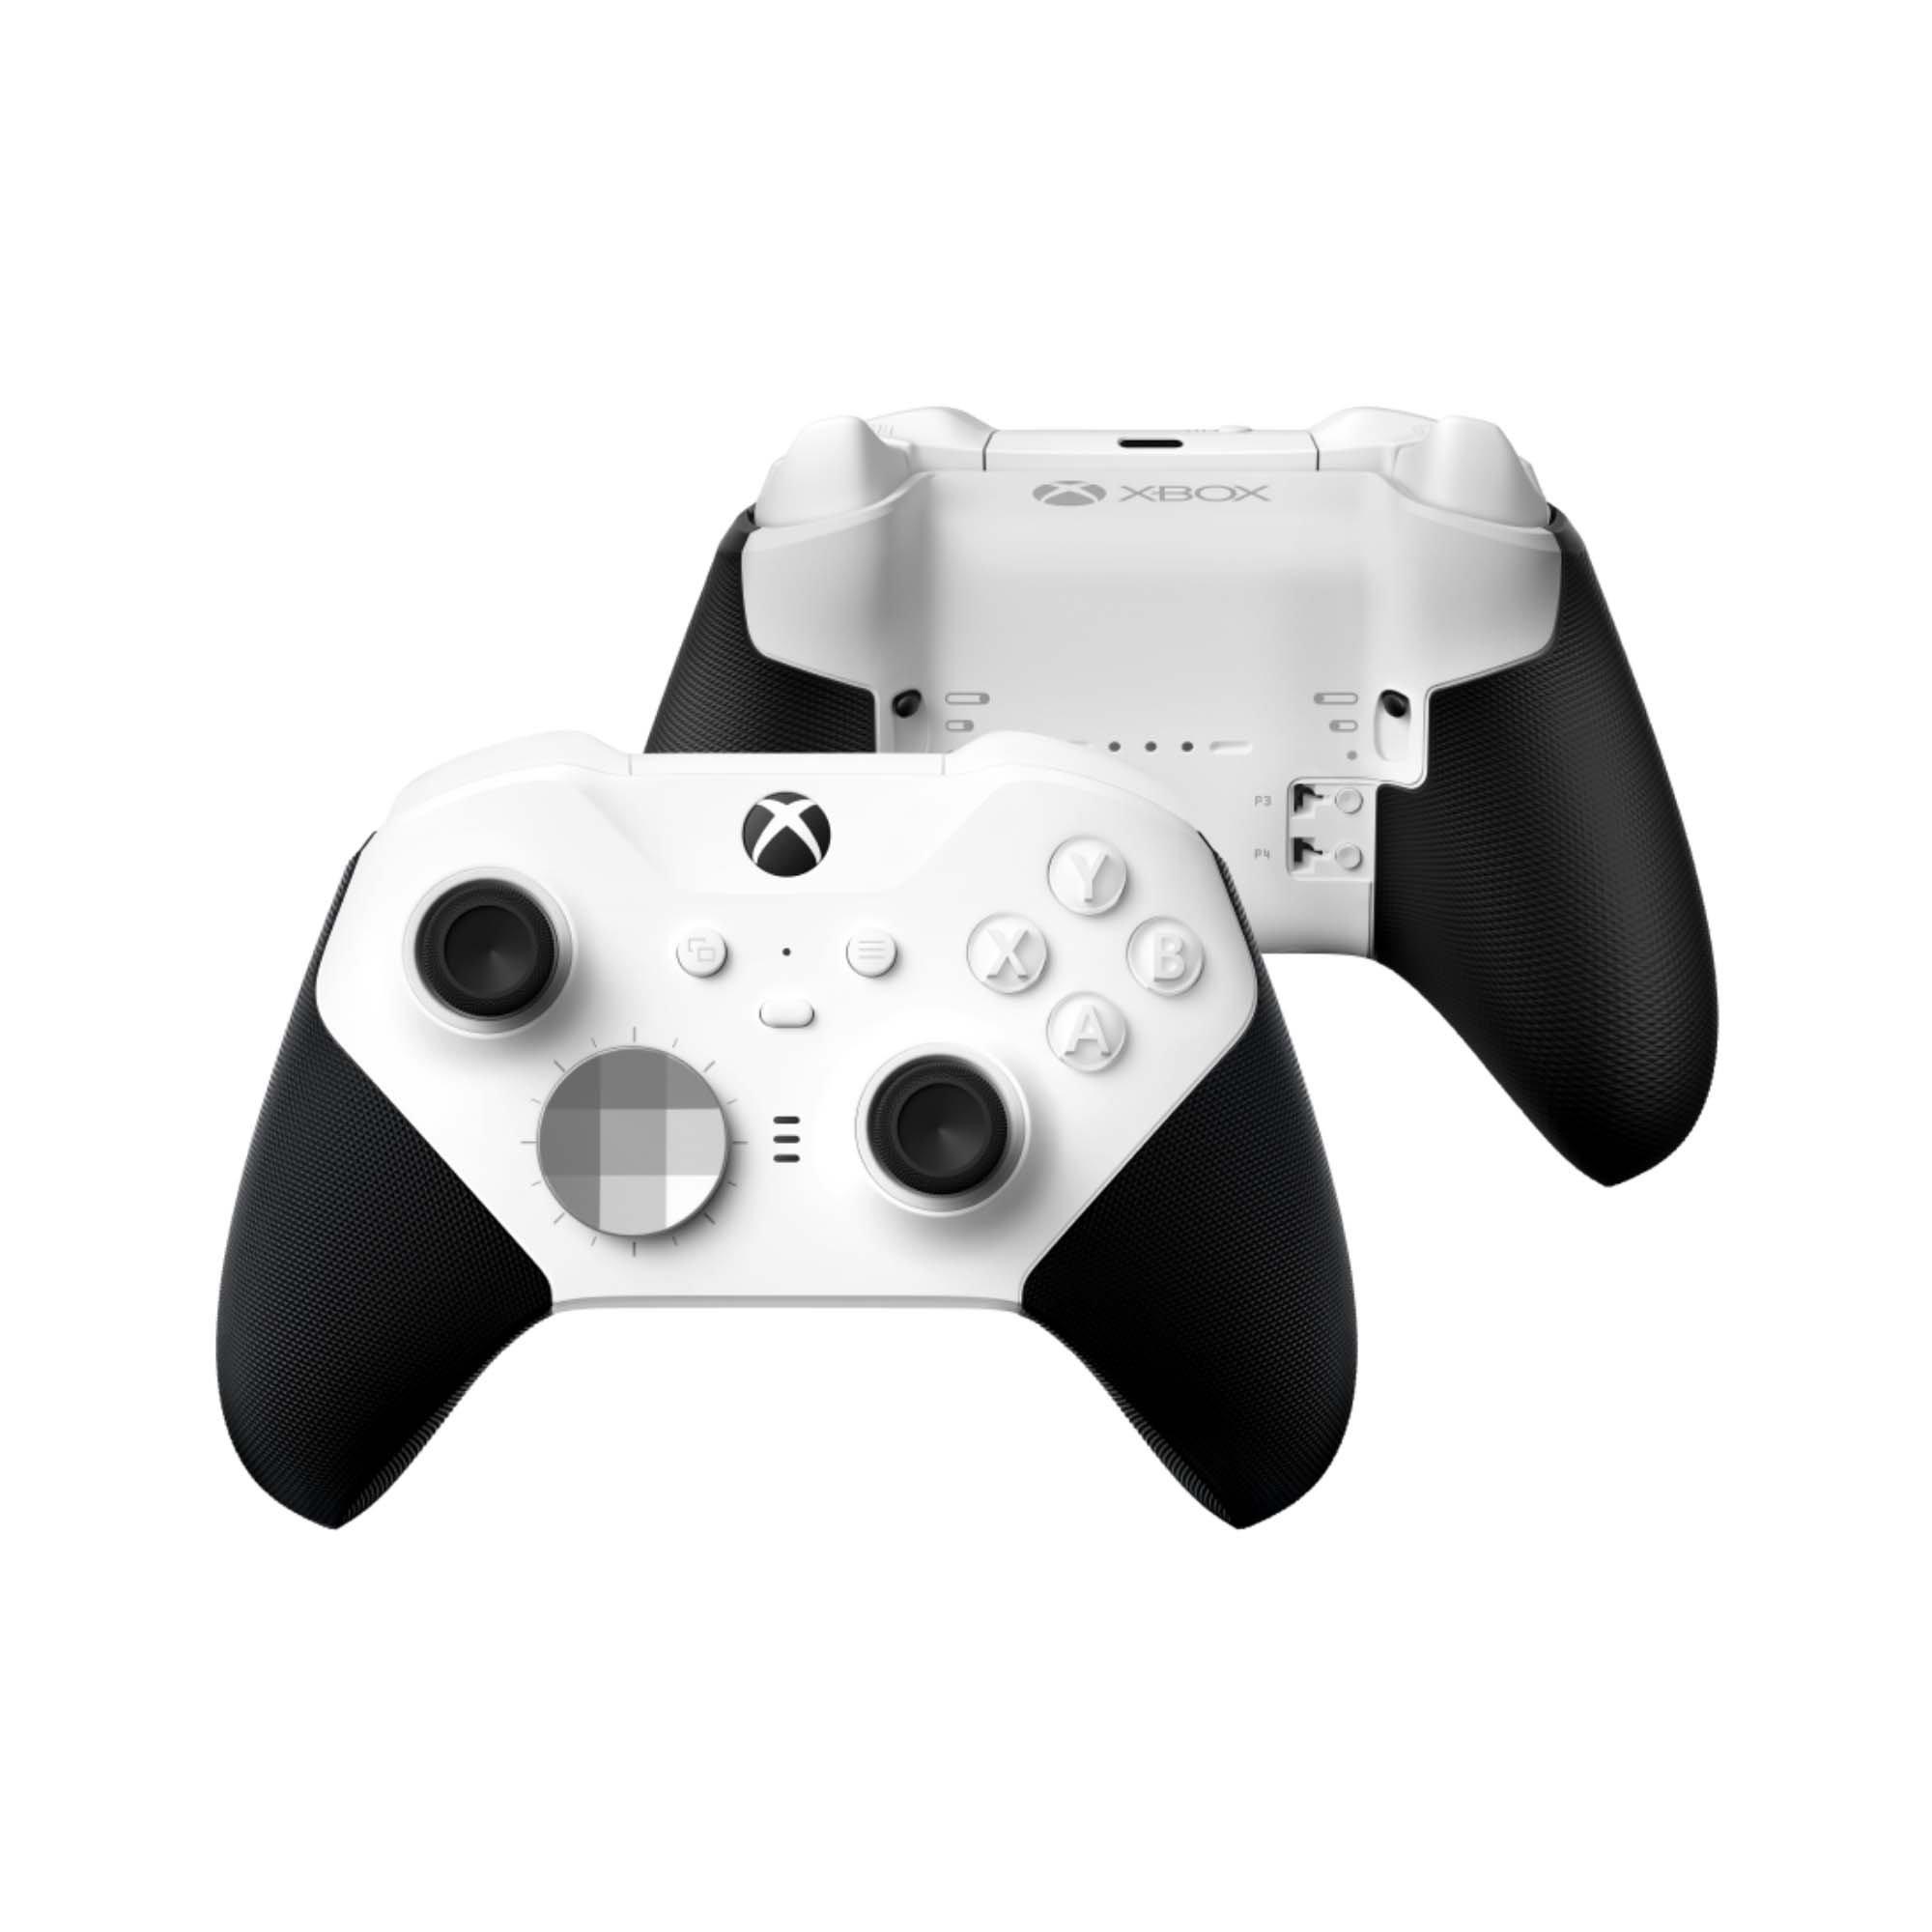 Microsoft Xbox Elite Series 2 Core Wireless Controller - Red/Black 